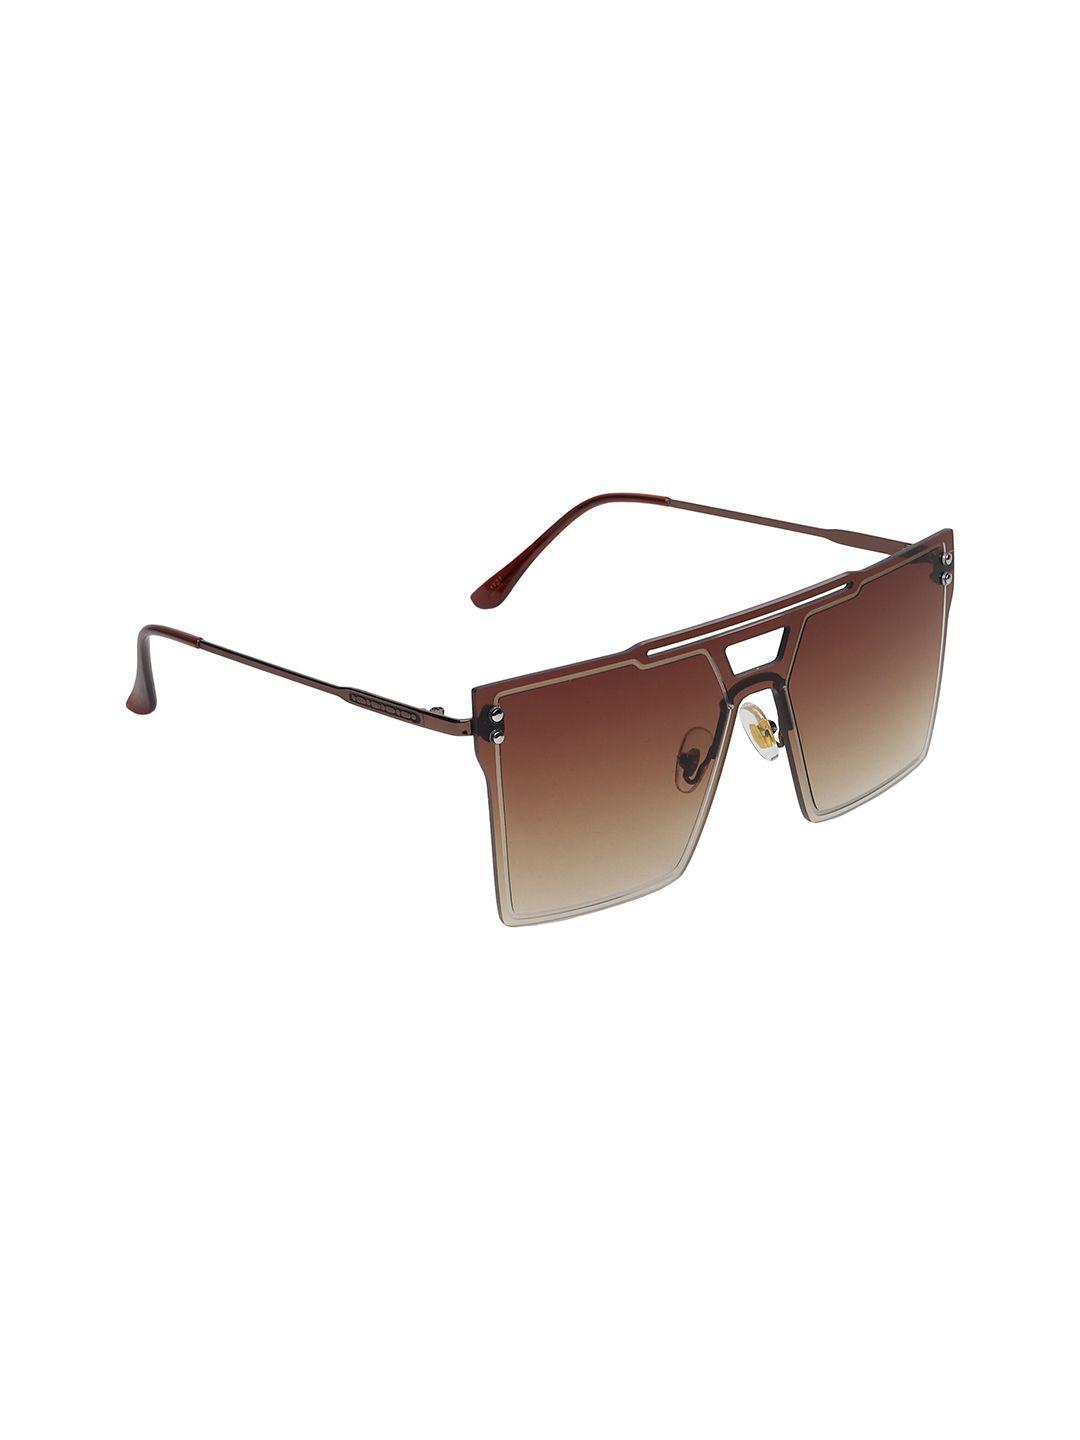 swiss design oversized sunglasses with uv protected lens sdsg-1121-02